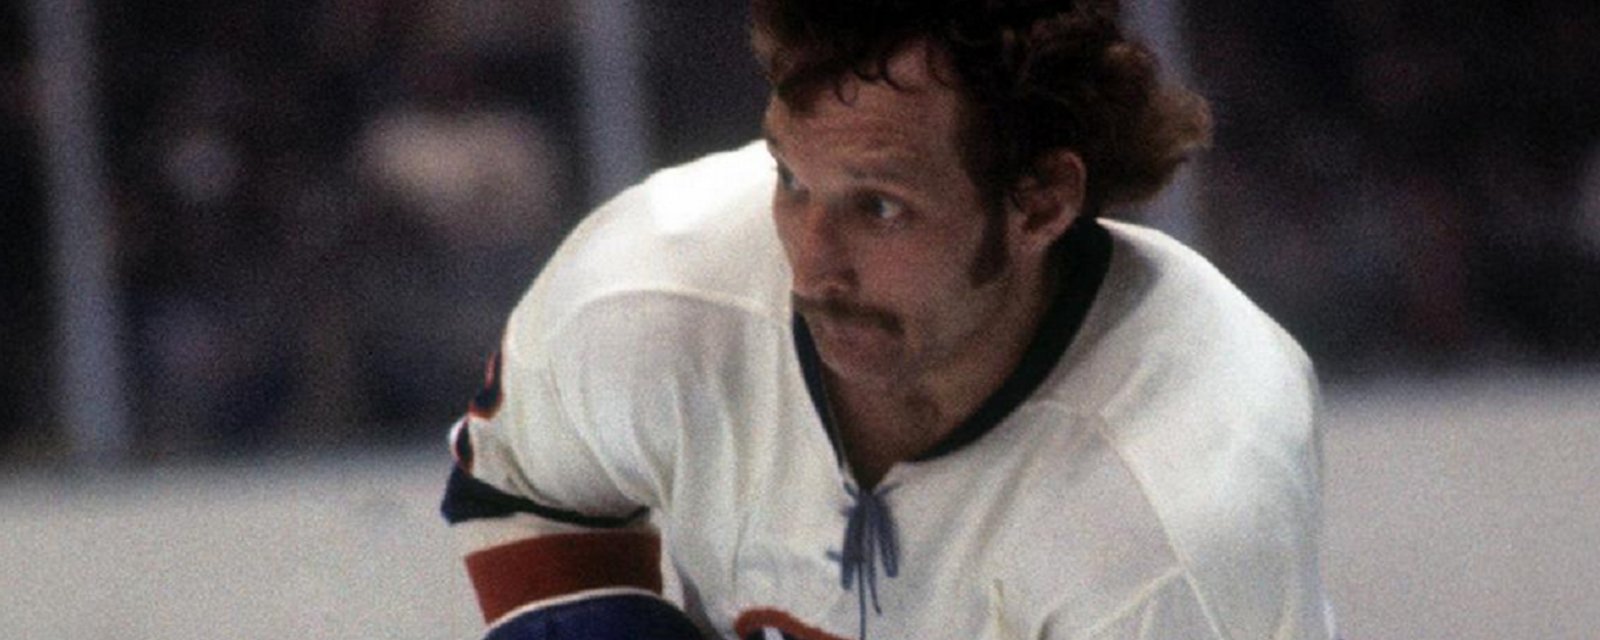 Former NHL defenseman Gerry Hart has died.